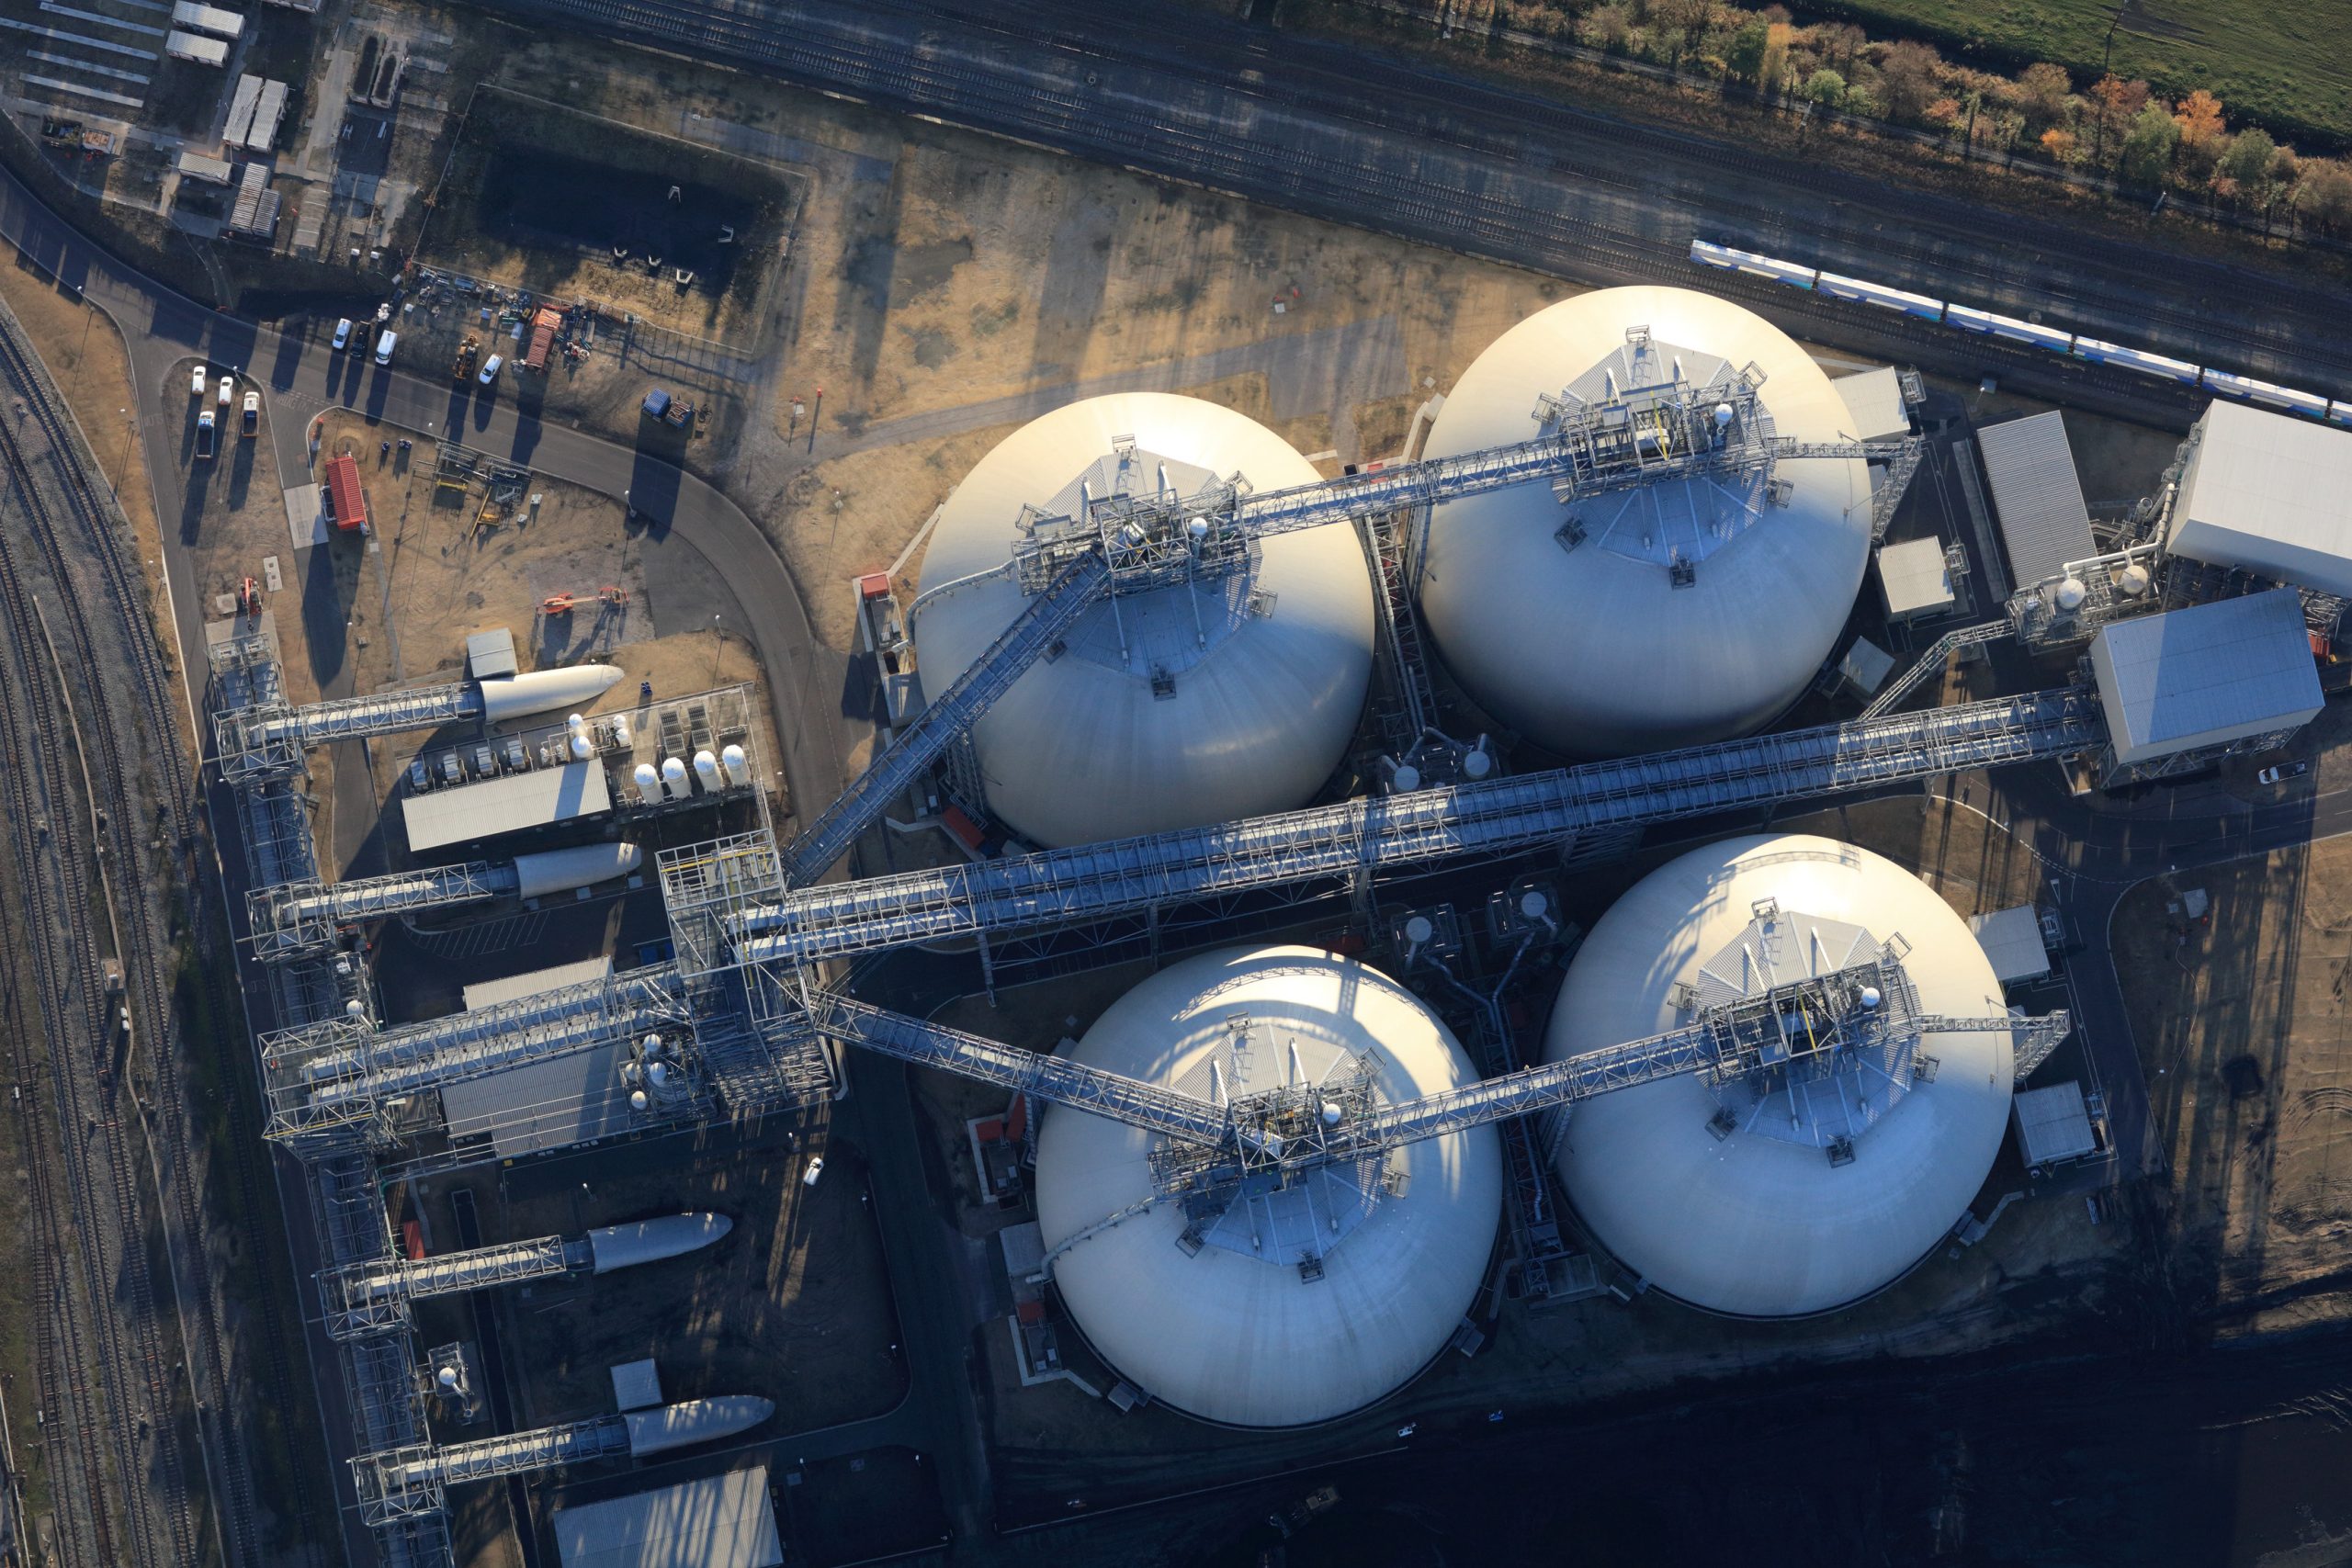 Aerial photo of biomass storage domes, Drax Power Station